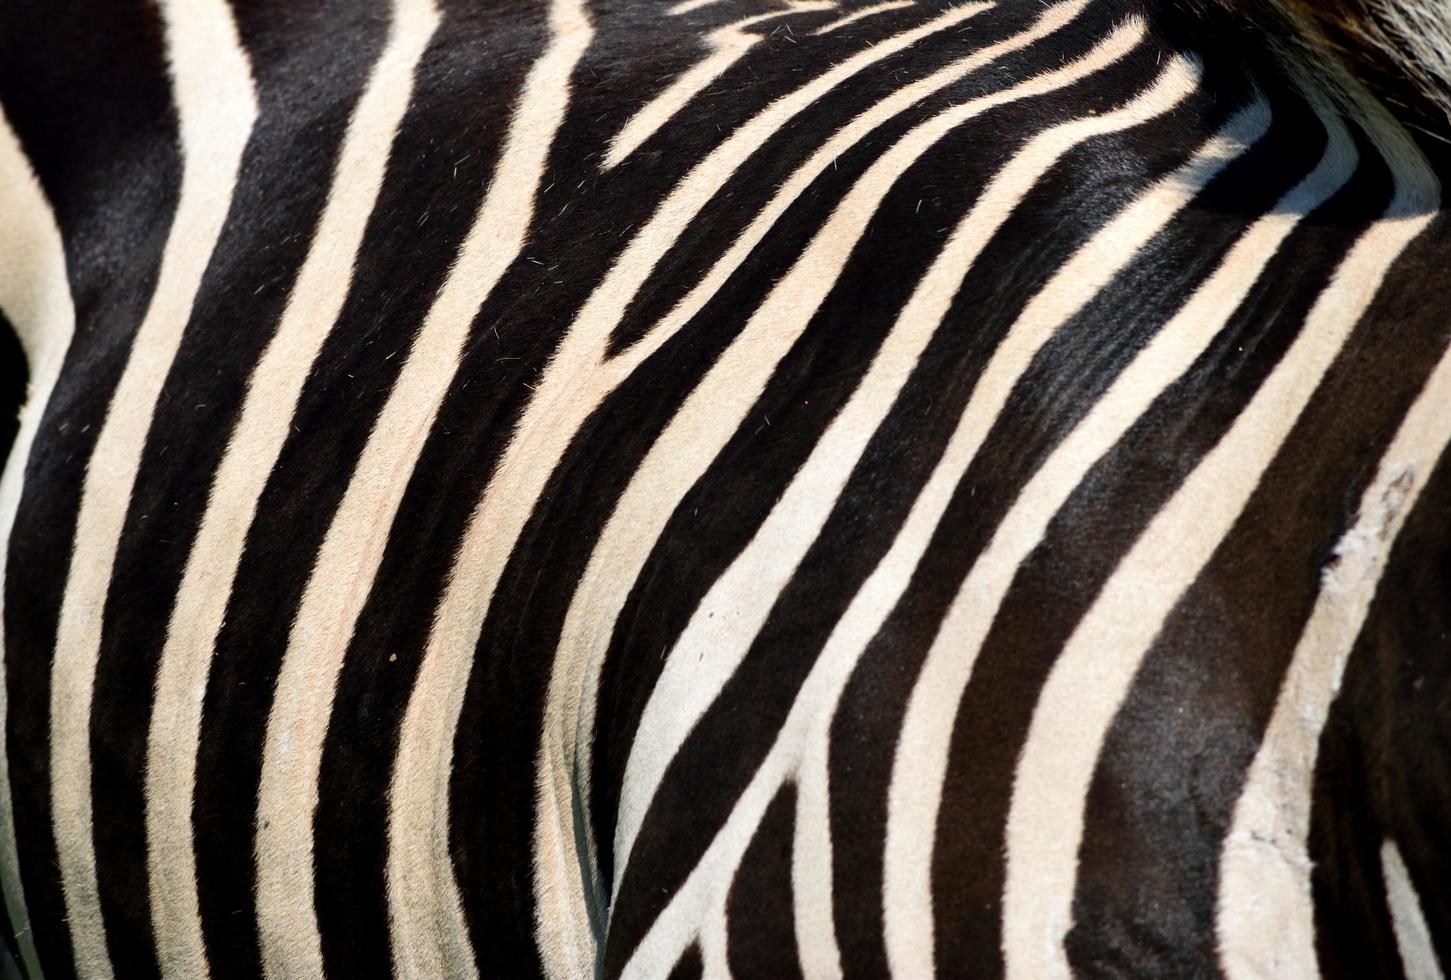 Zebra stripes close-up photo